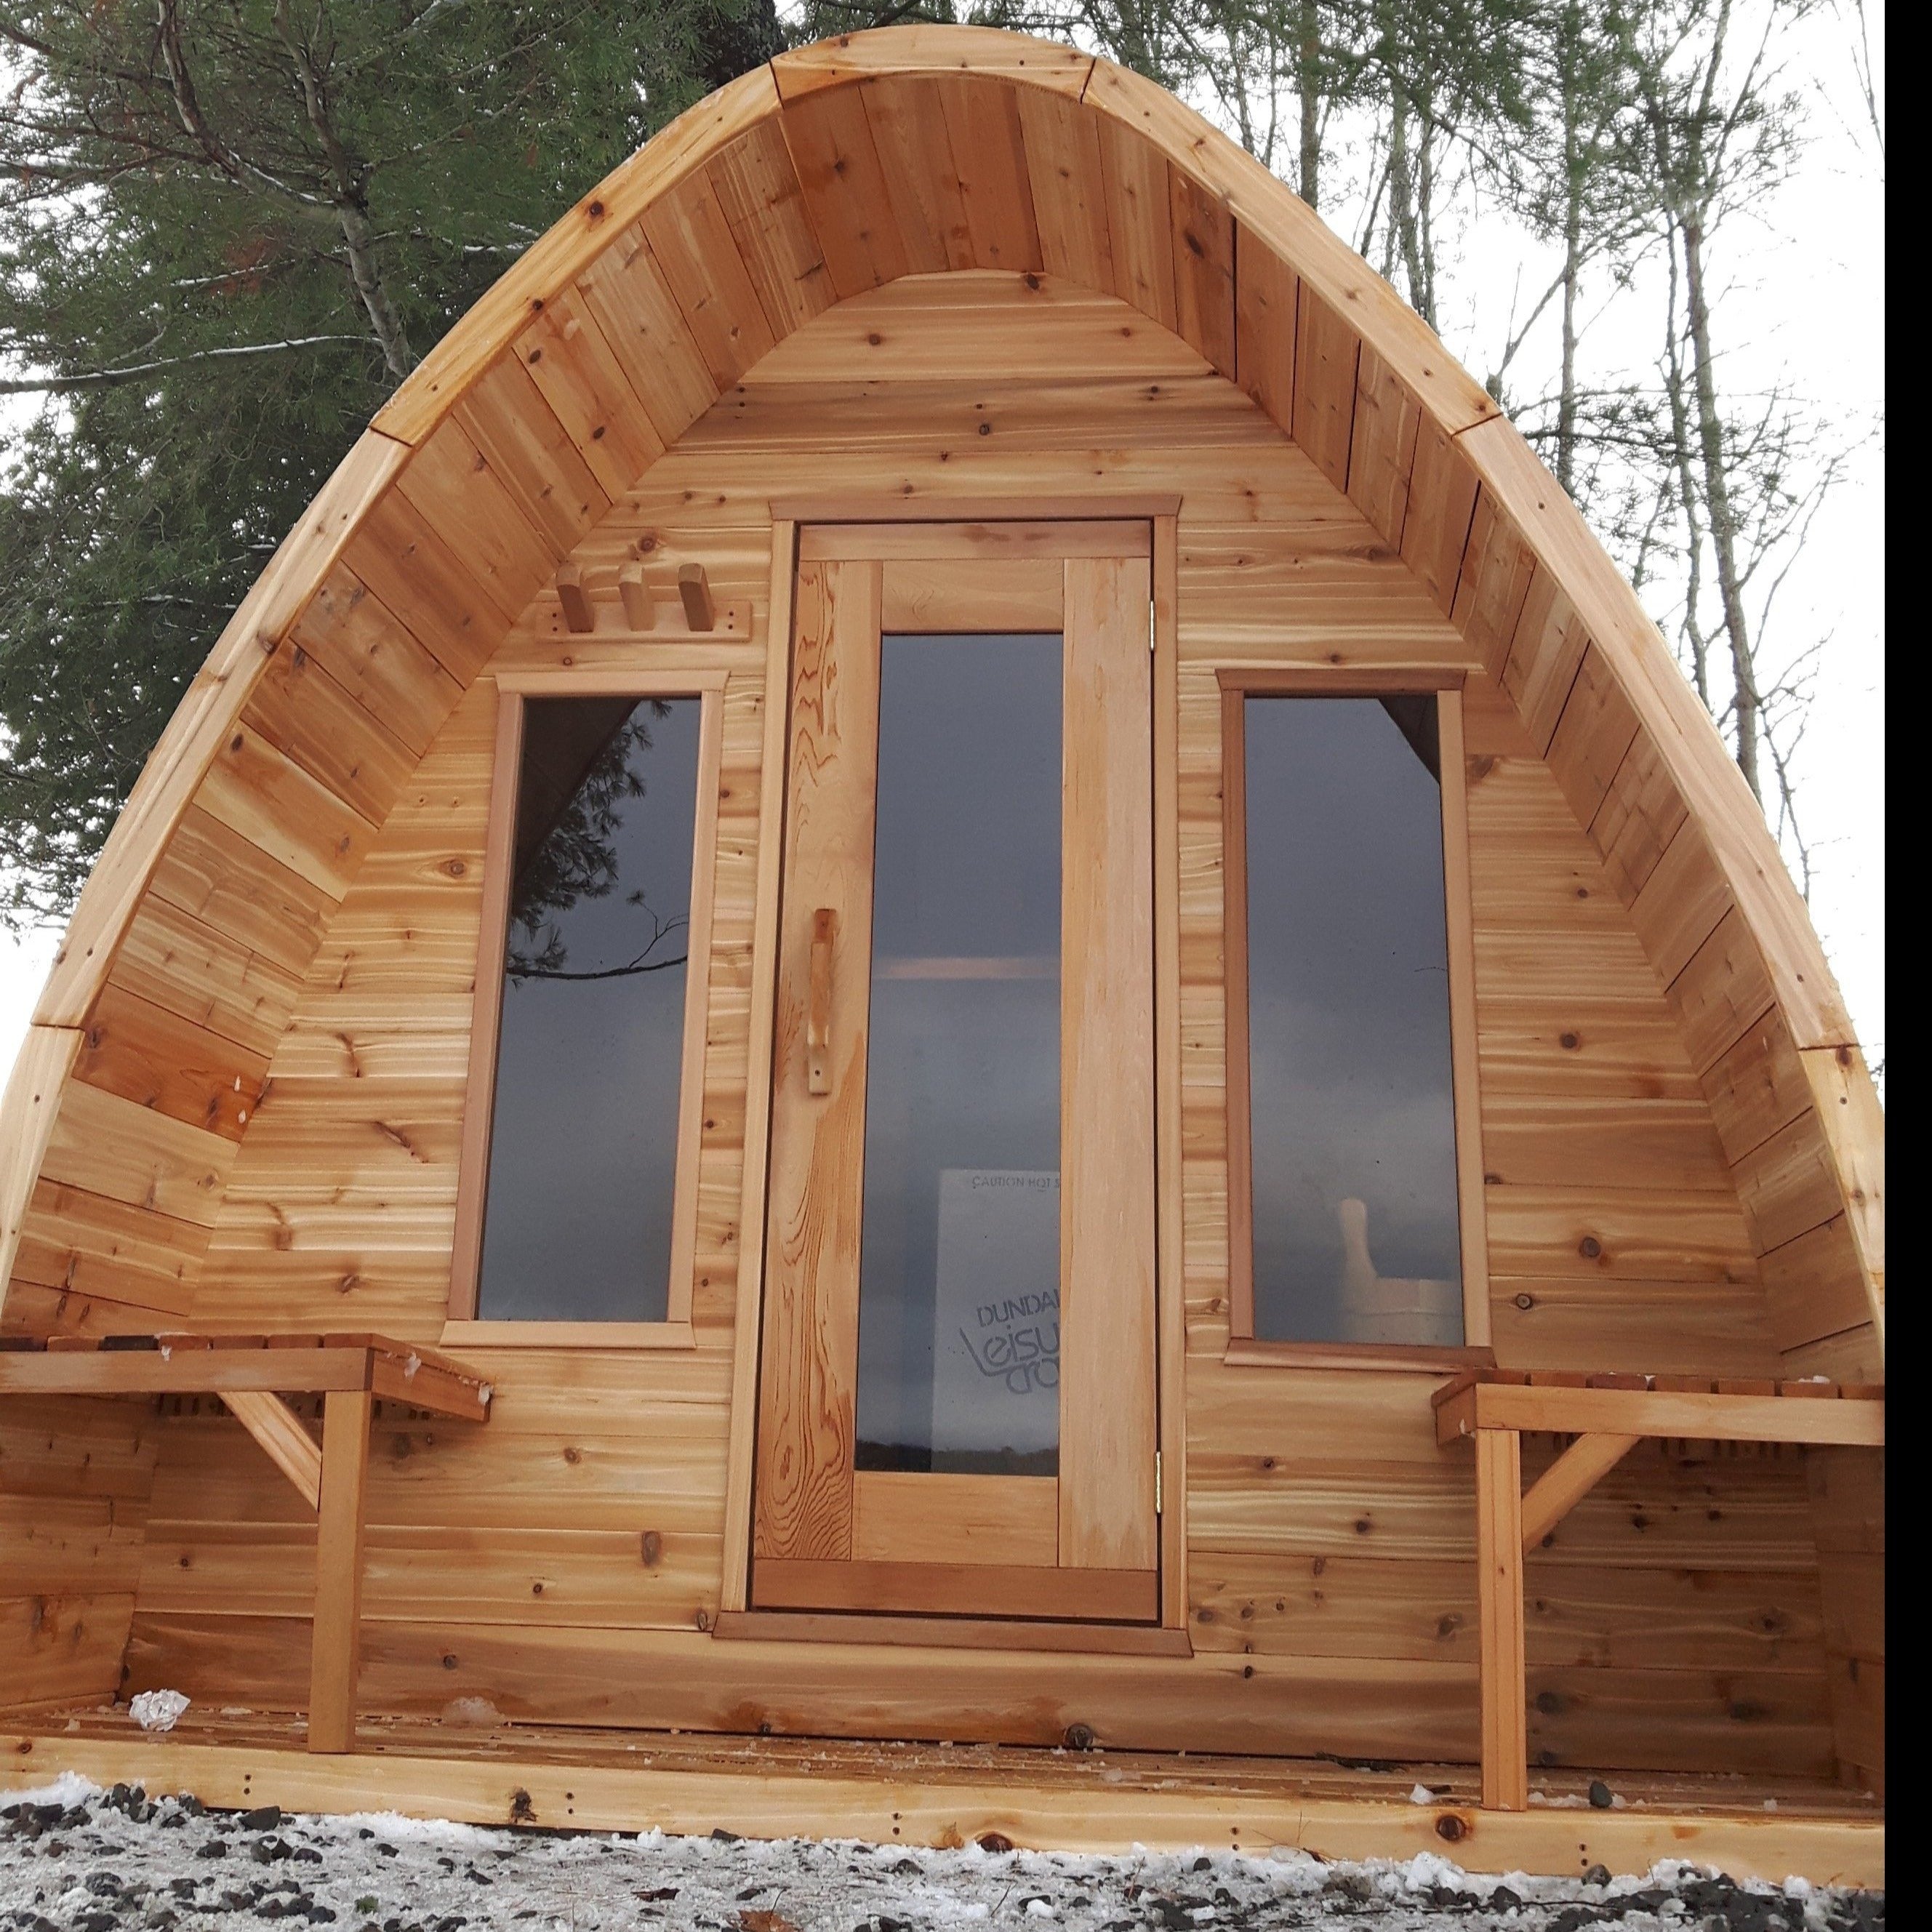 Knotty Pod Sauna with 2 windows and porch